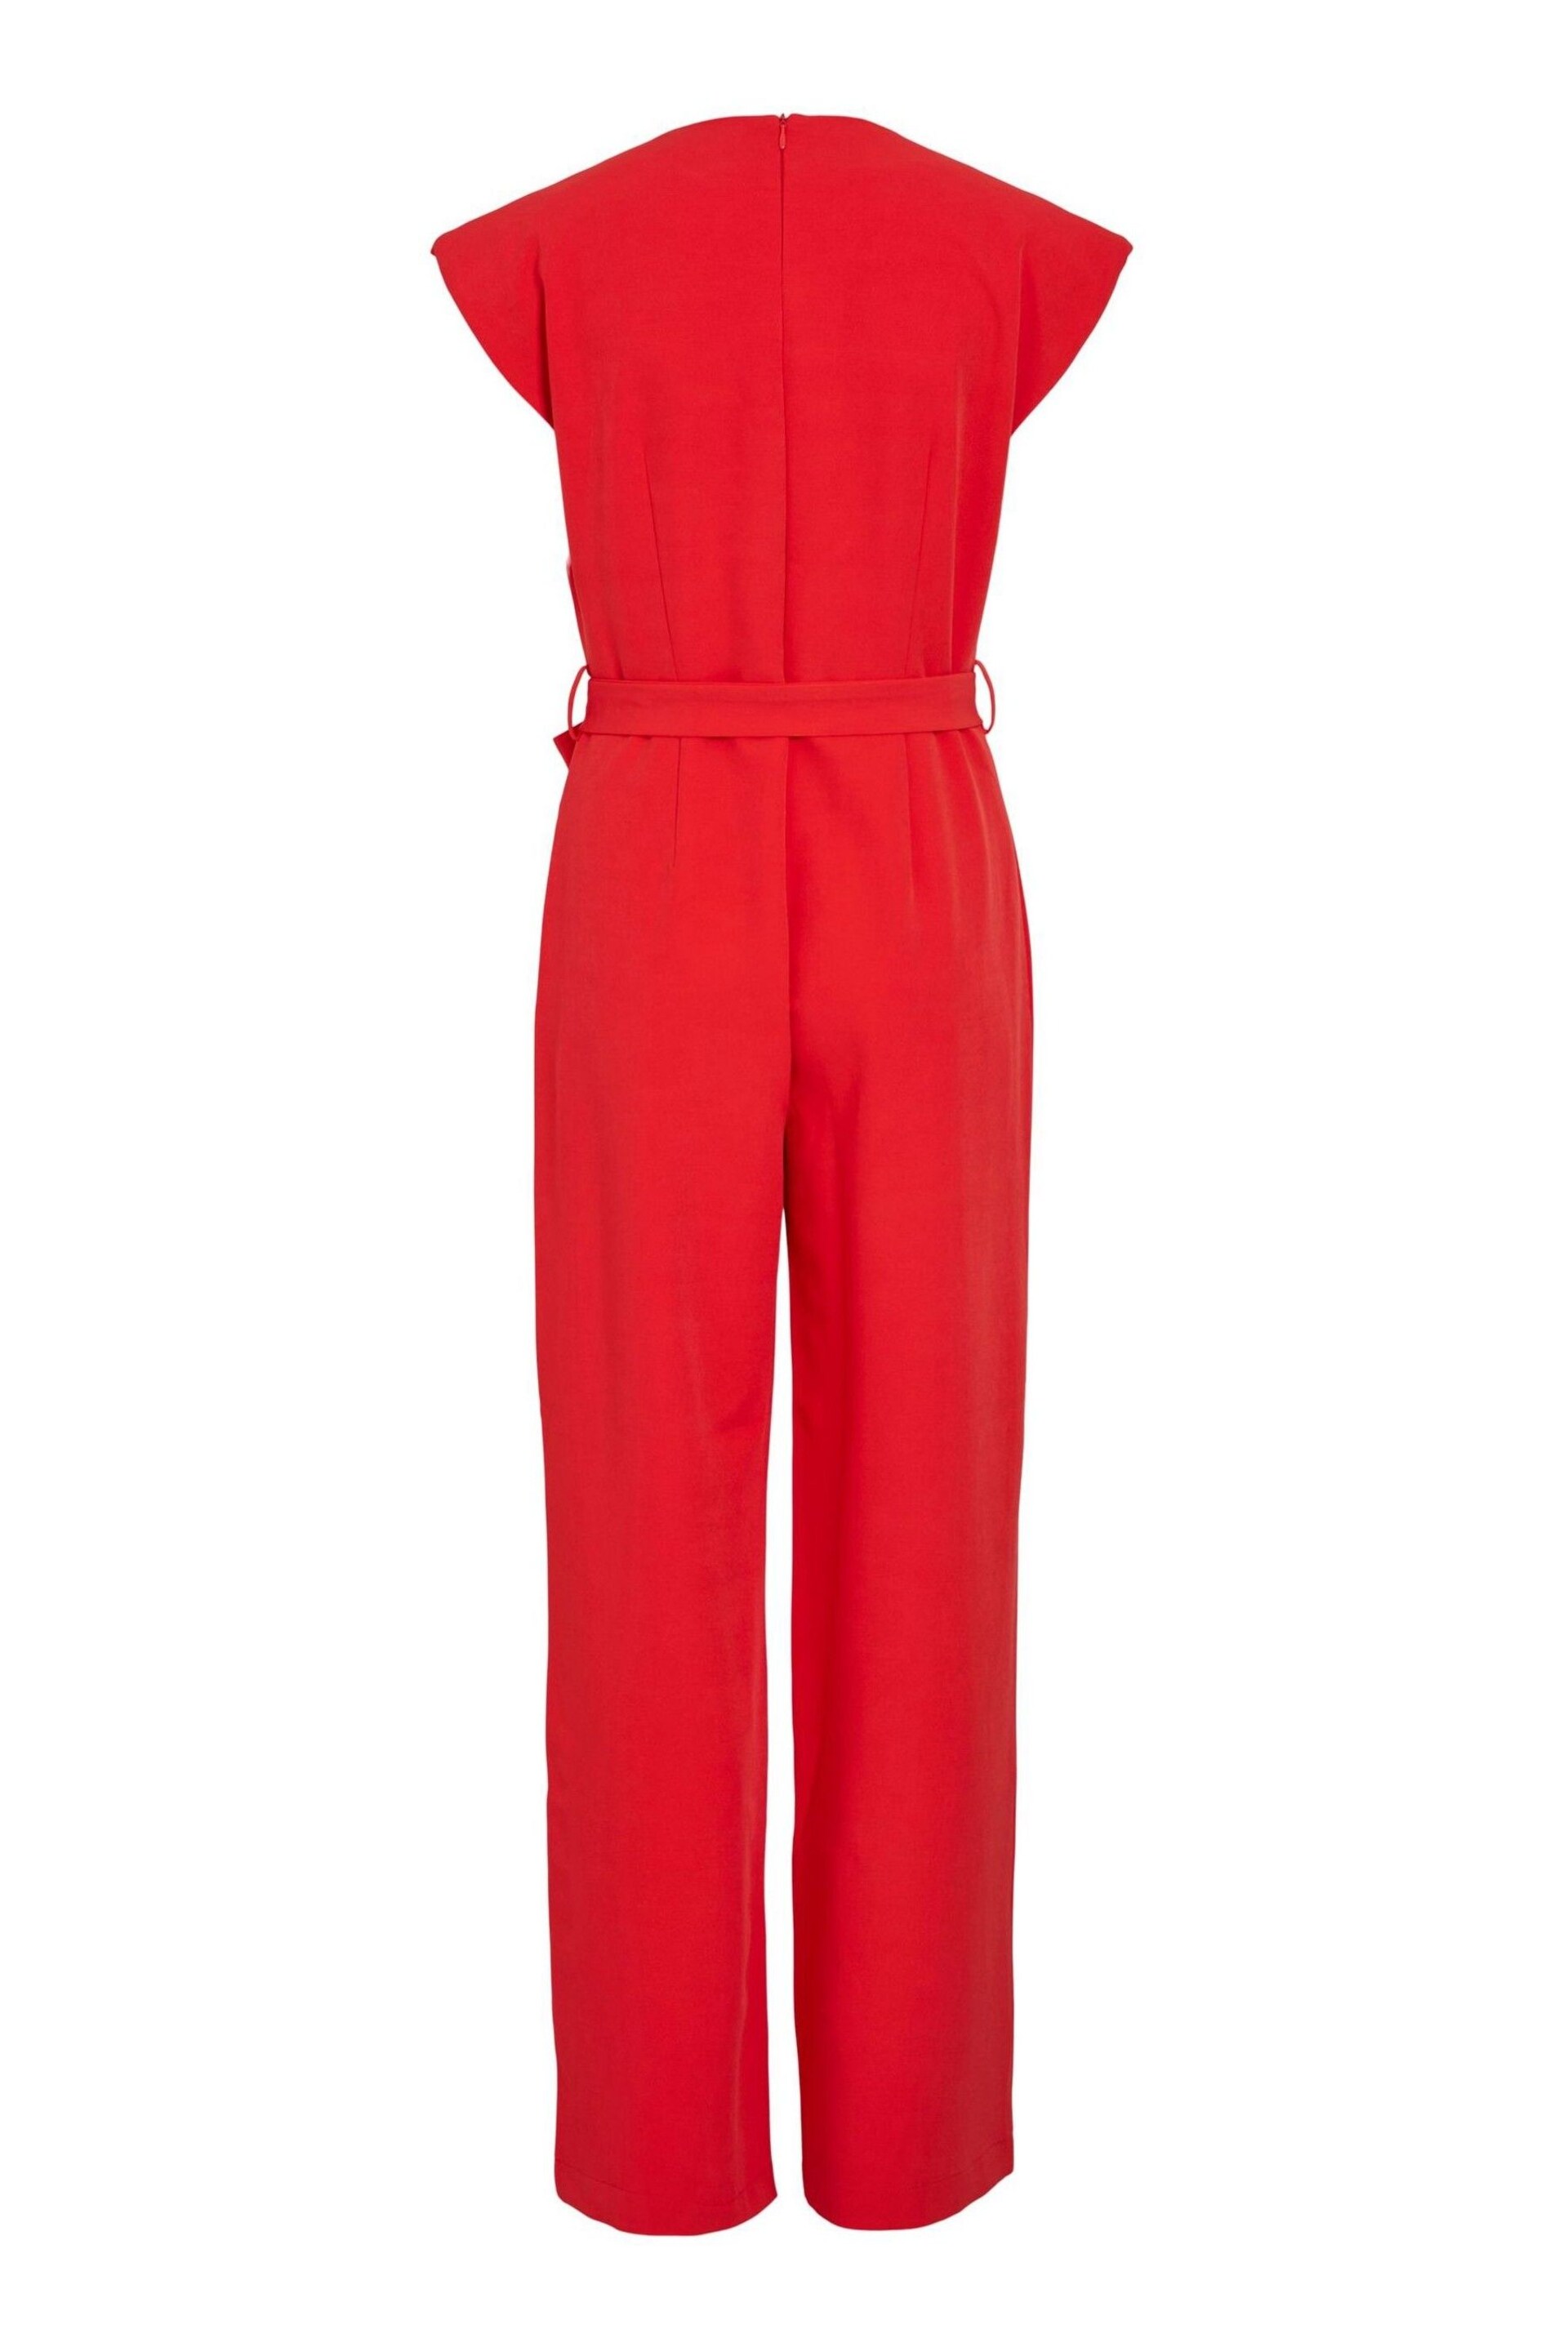 VILA Red Tie Waist Smart Jumpsuit - Image 6 of 6